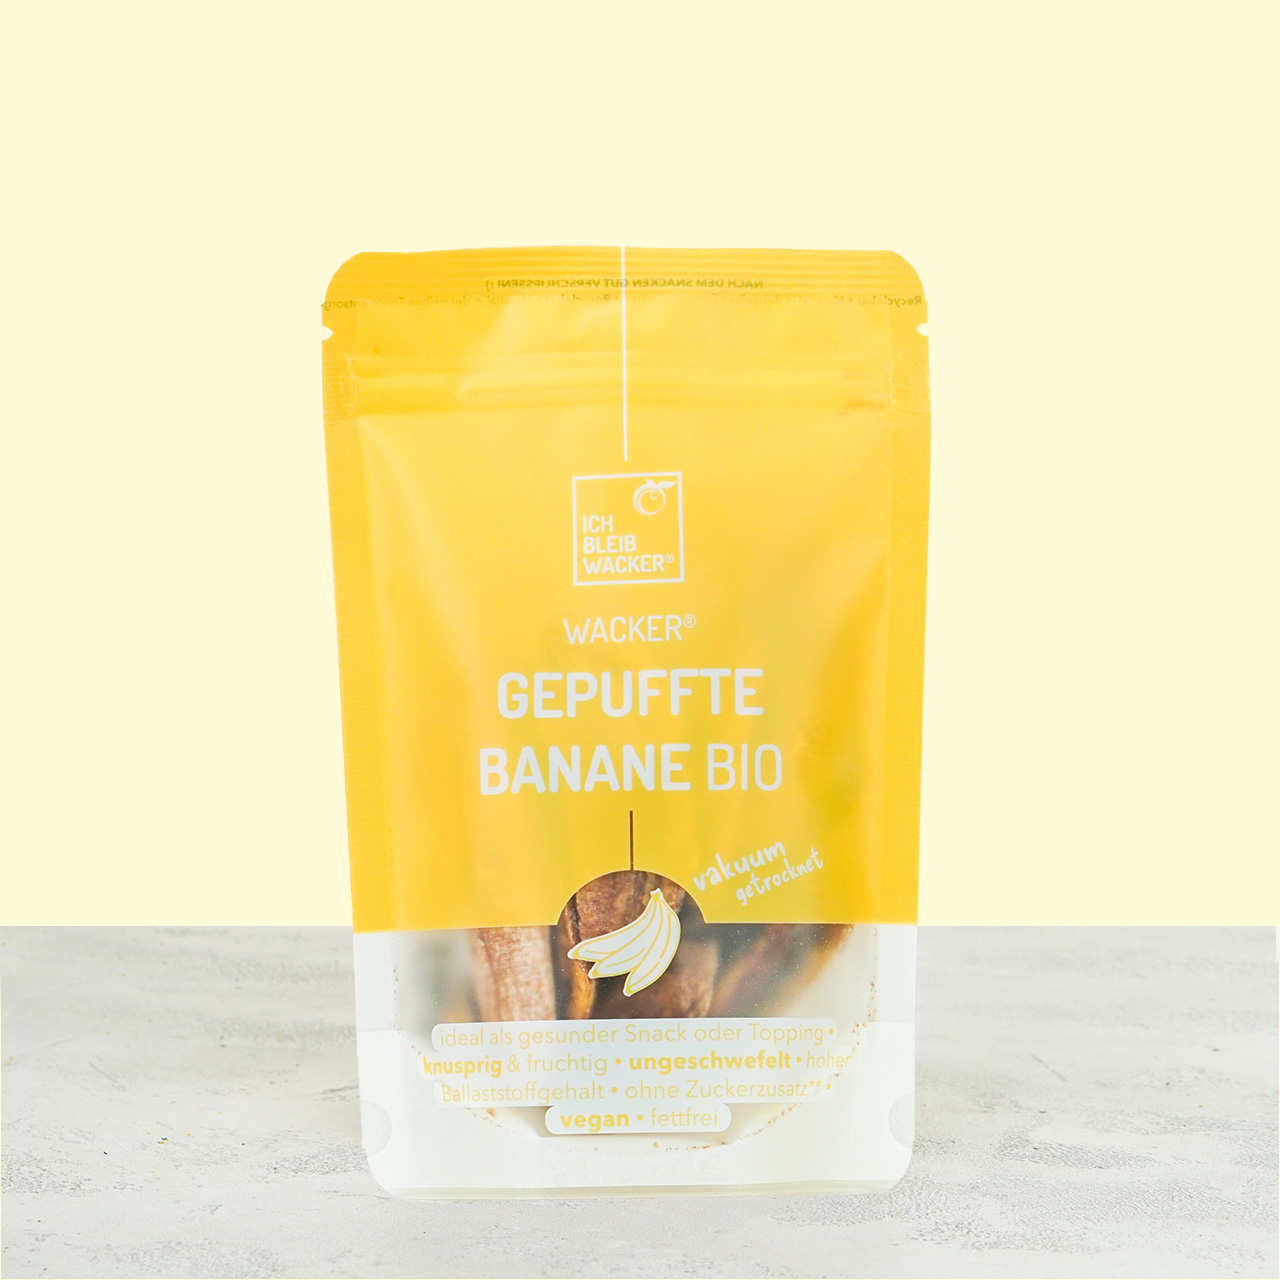 Wacker Gepuffte Banane Bio, 80g